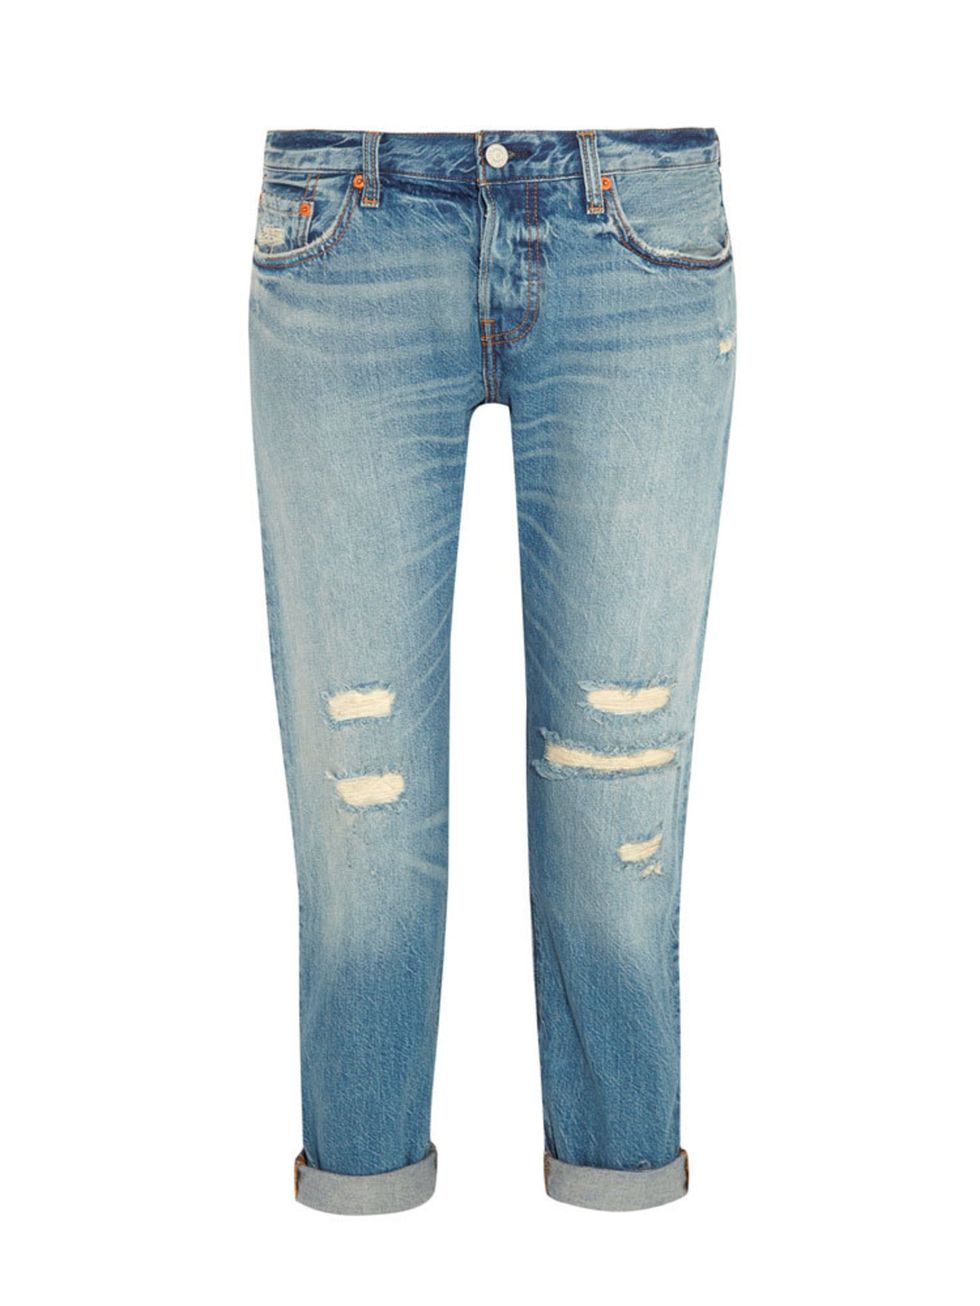 <p>Levi's jeans, £95 at <a href="http://www.net-a-porter.com/gb/en/product/551536" target="_blank">net-a-porter.com</a></p>